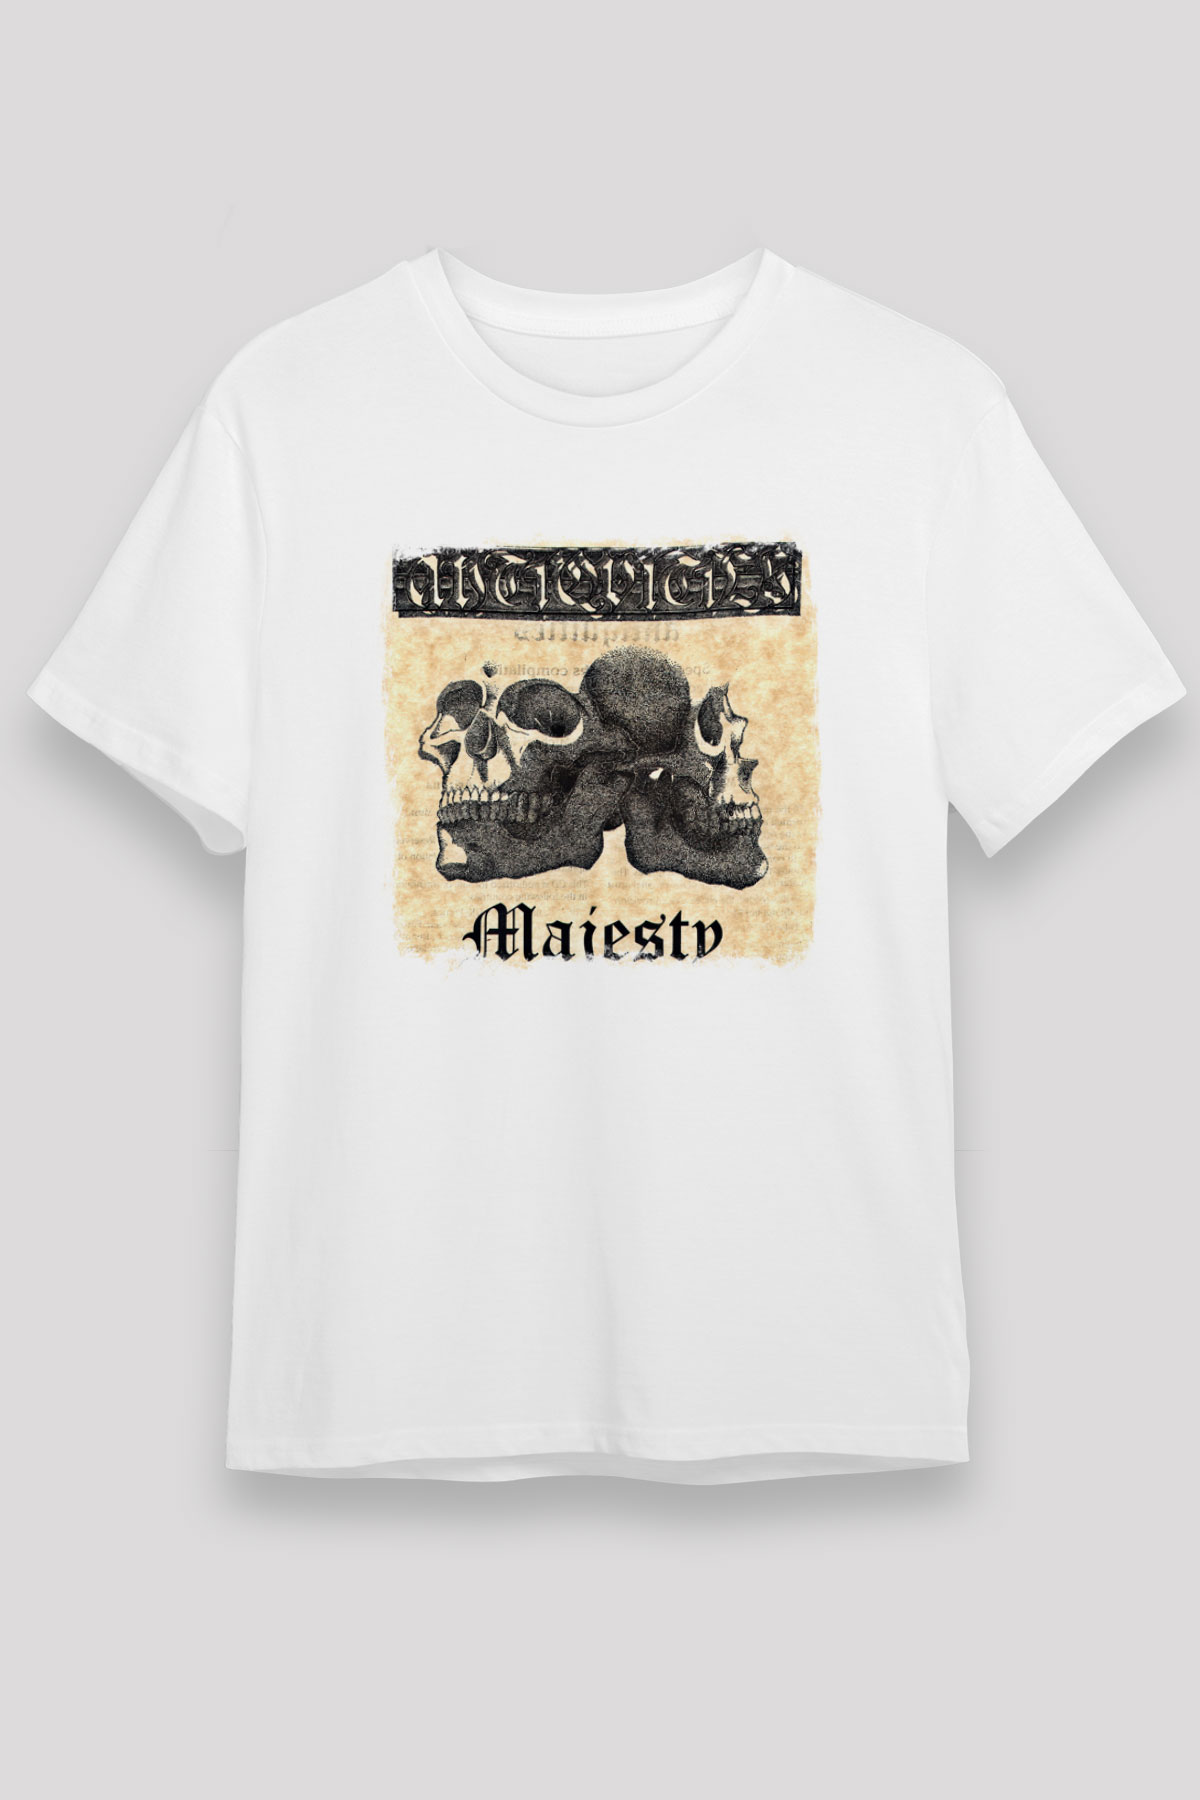 Dream Theater T shirt,Music Band,Unisex Tshirt 14/